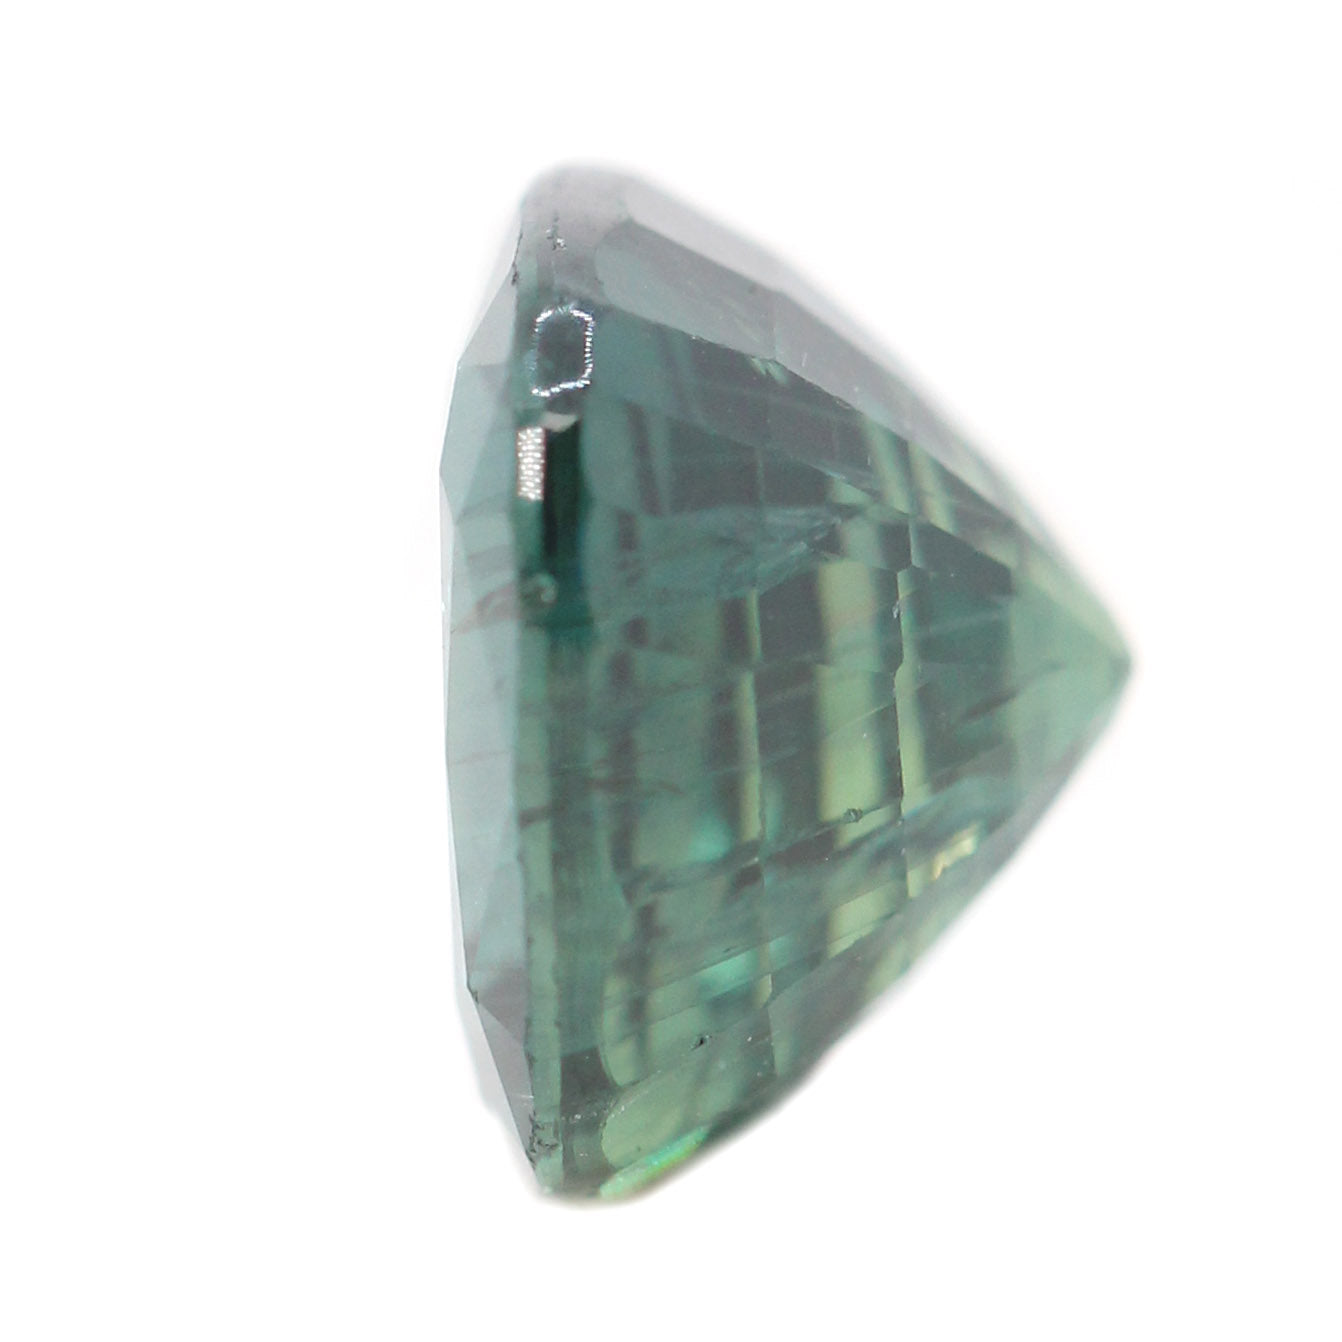 4.18 Carat Cushion Cut Teal Green Sapphire for Custom Work - Inventory Code BGCSAP418 - Midwinter Co. Alternative Bridal Rings and Modern Fine Jewelry